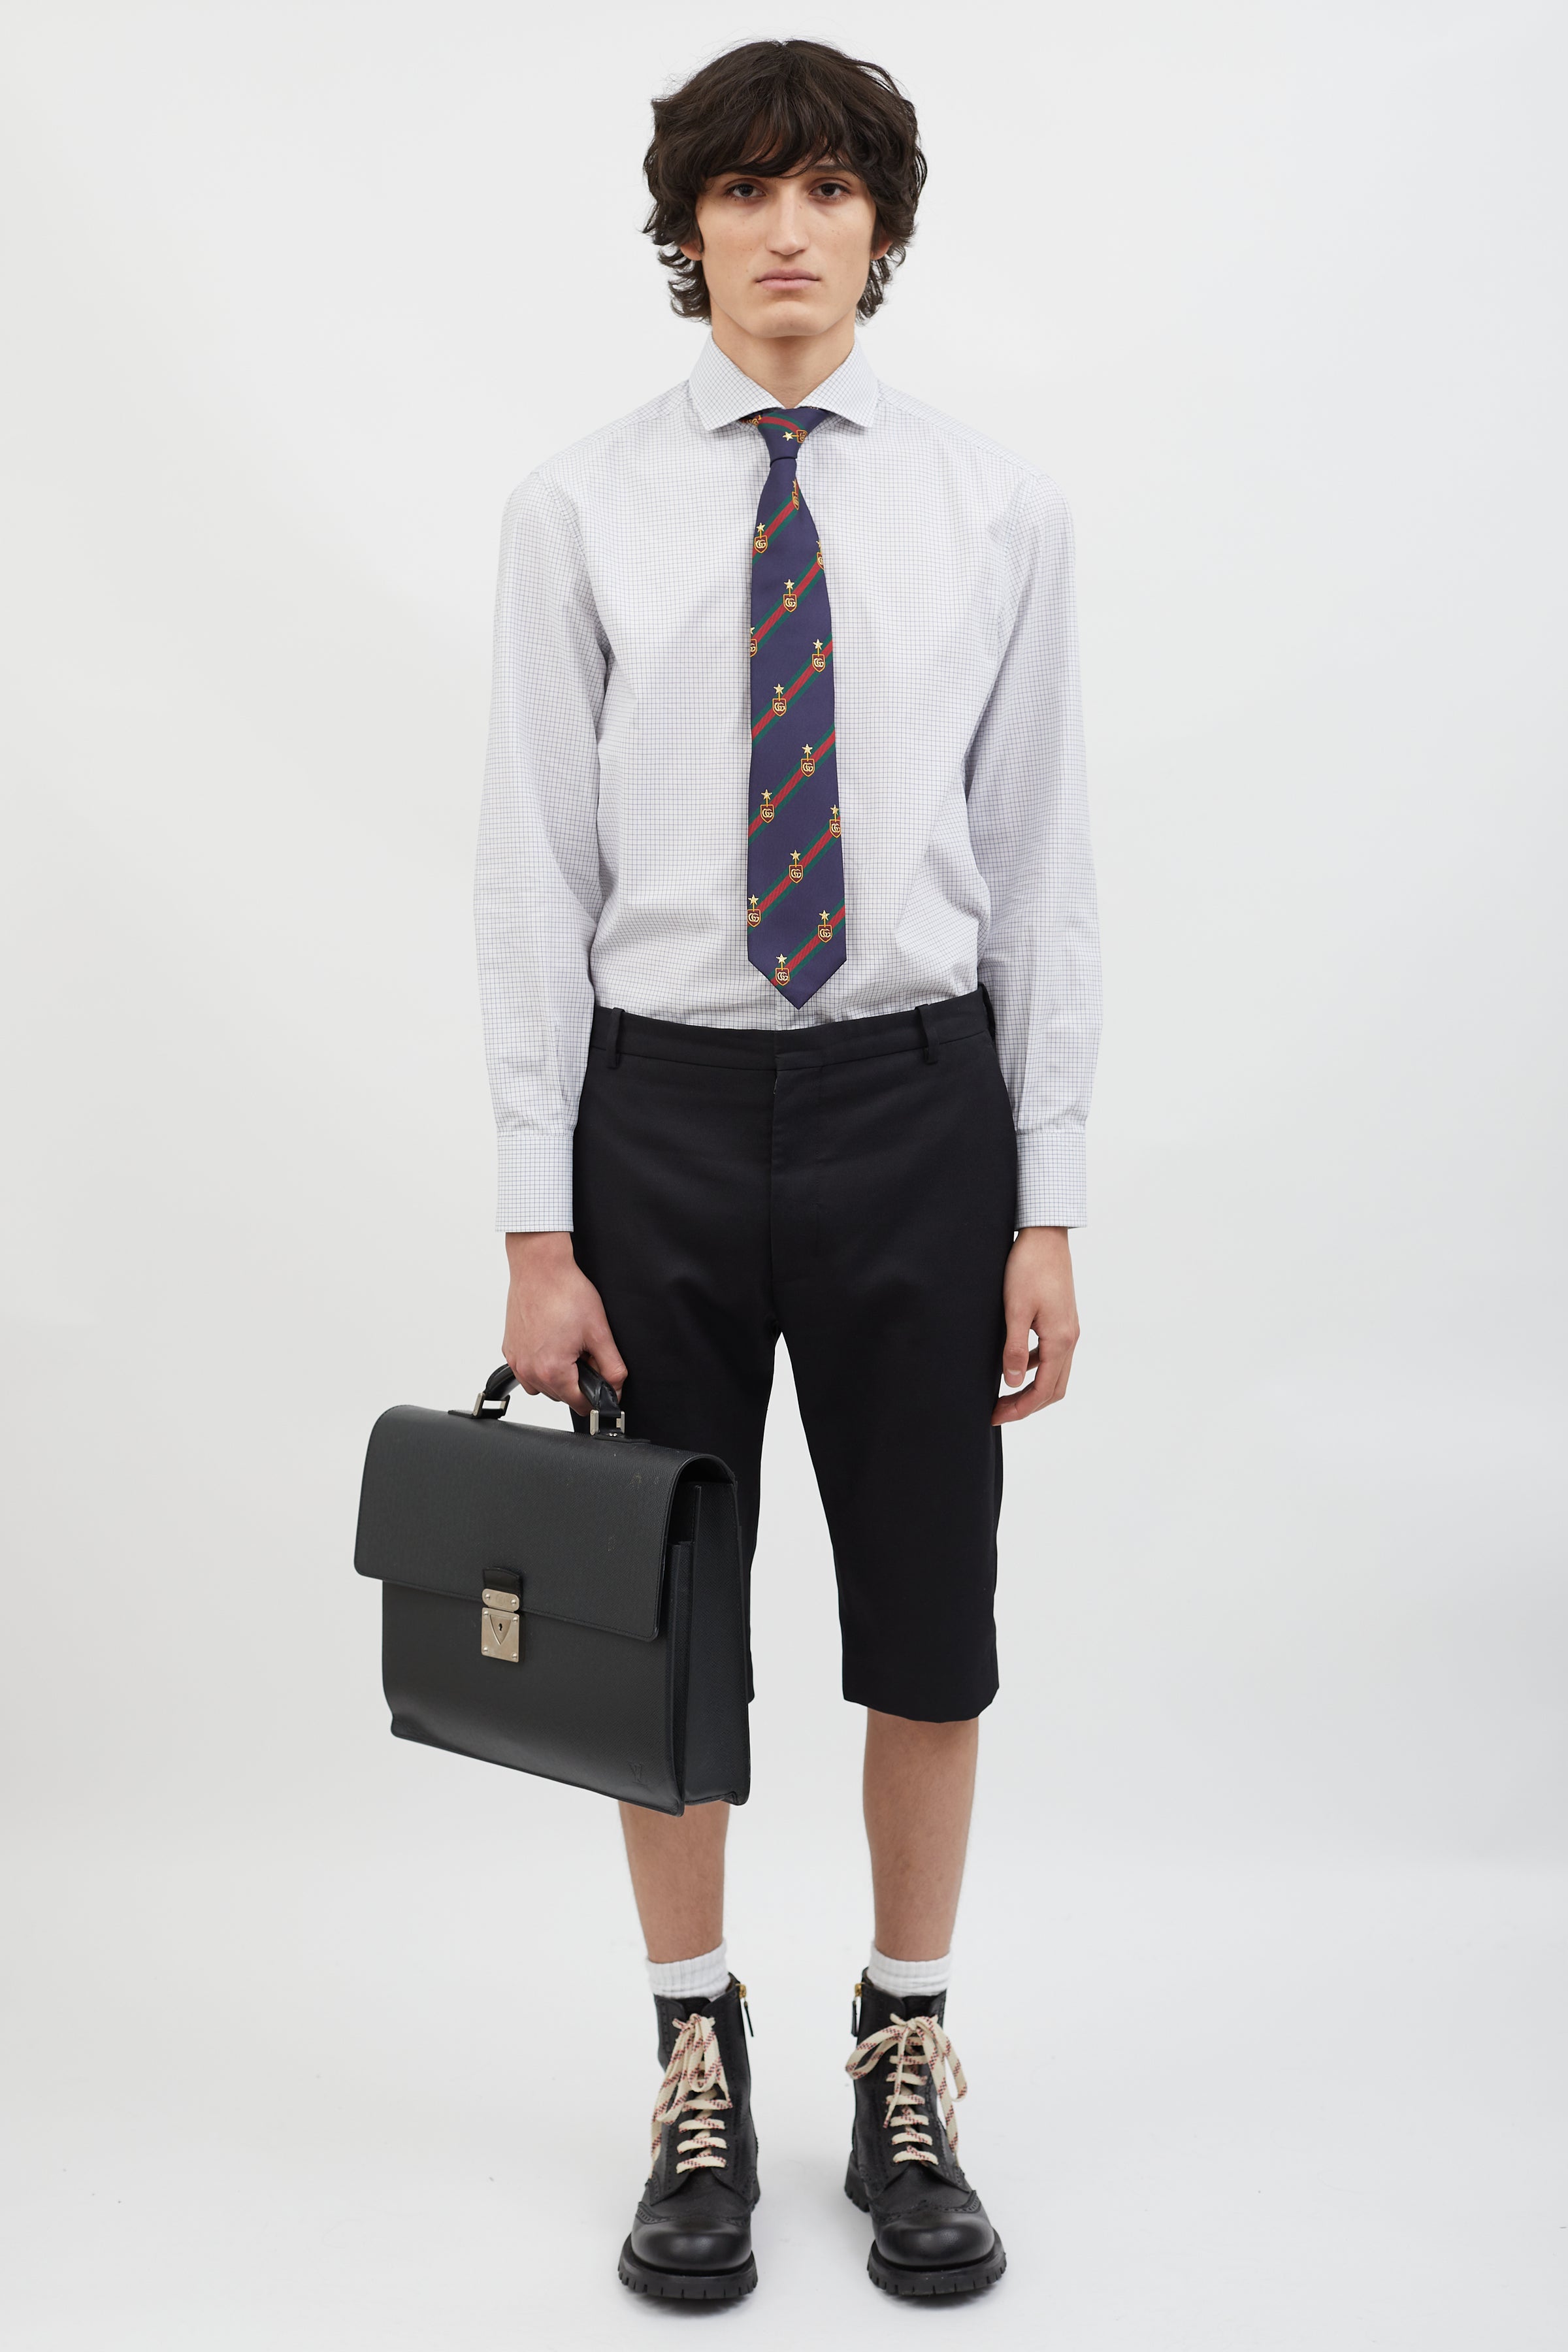 Louis Vuitton Black Briefcase 0161 2400x